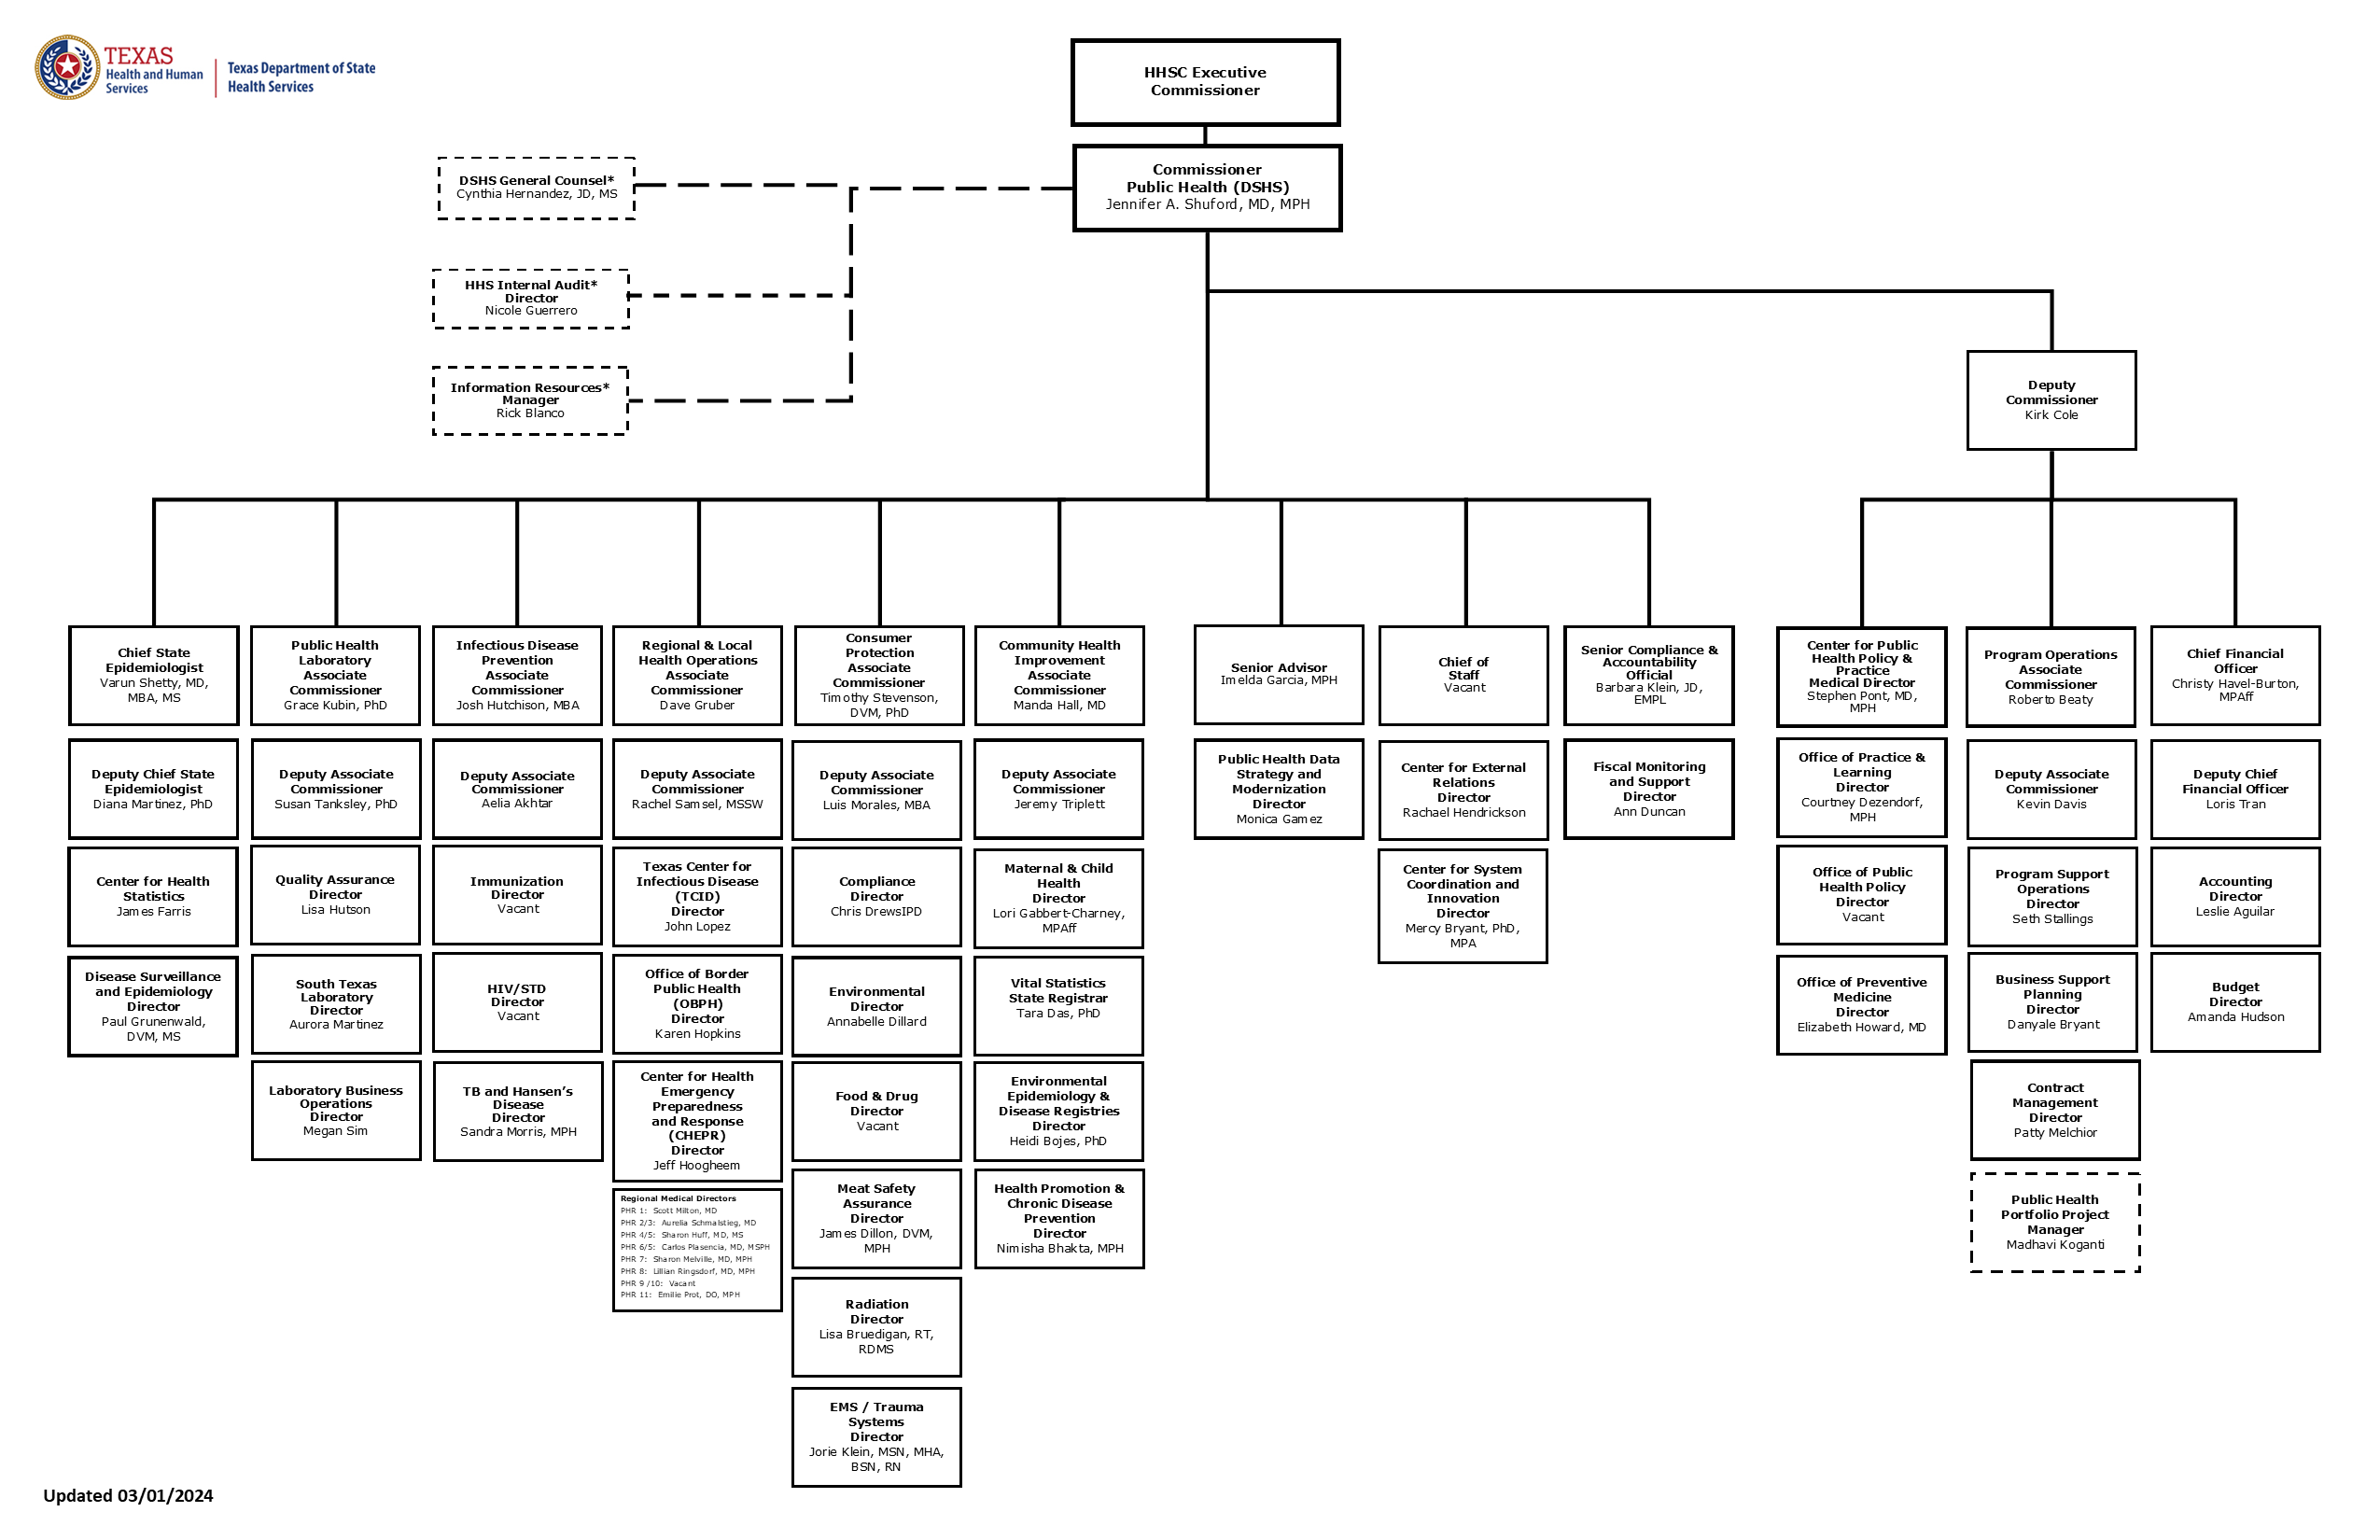 DSHS Organizational Chart